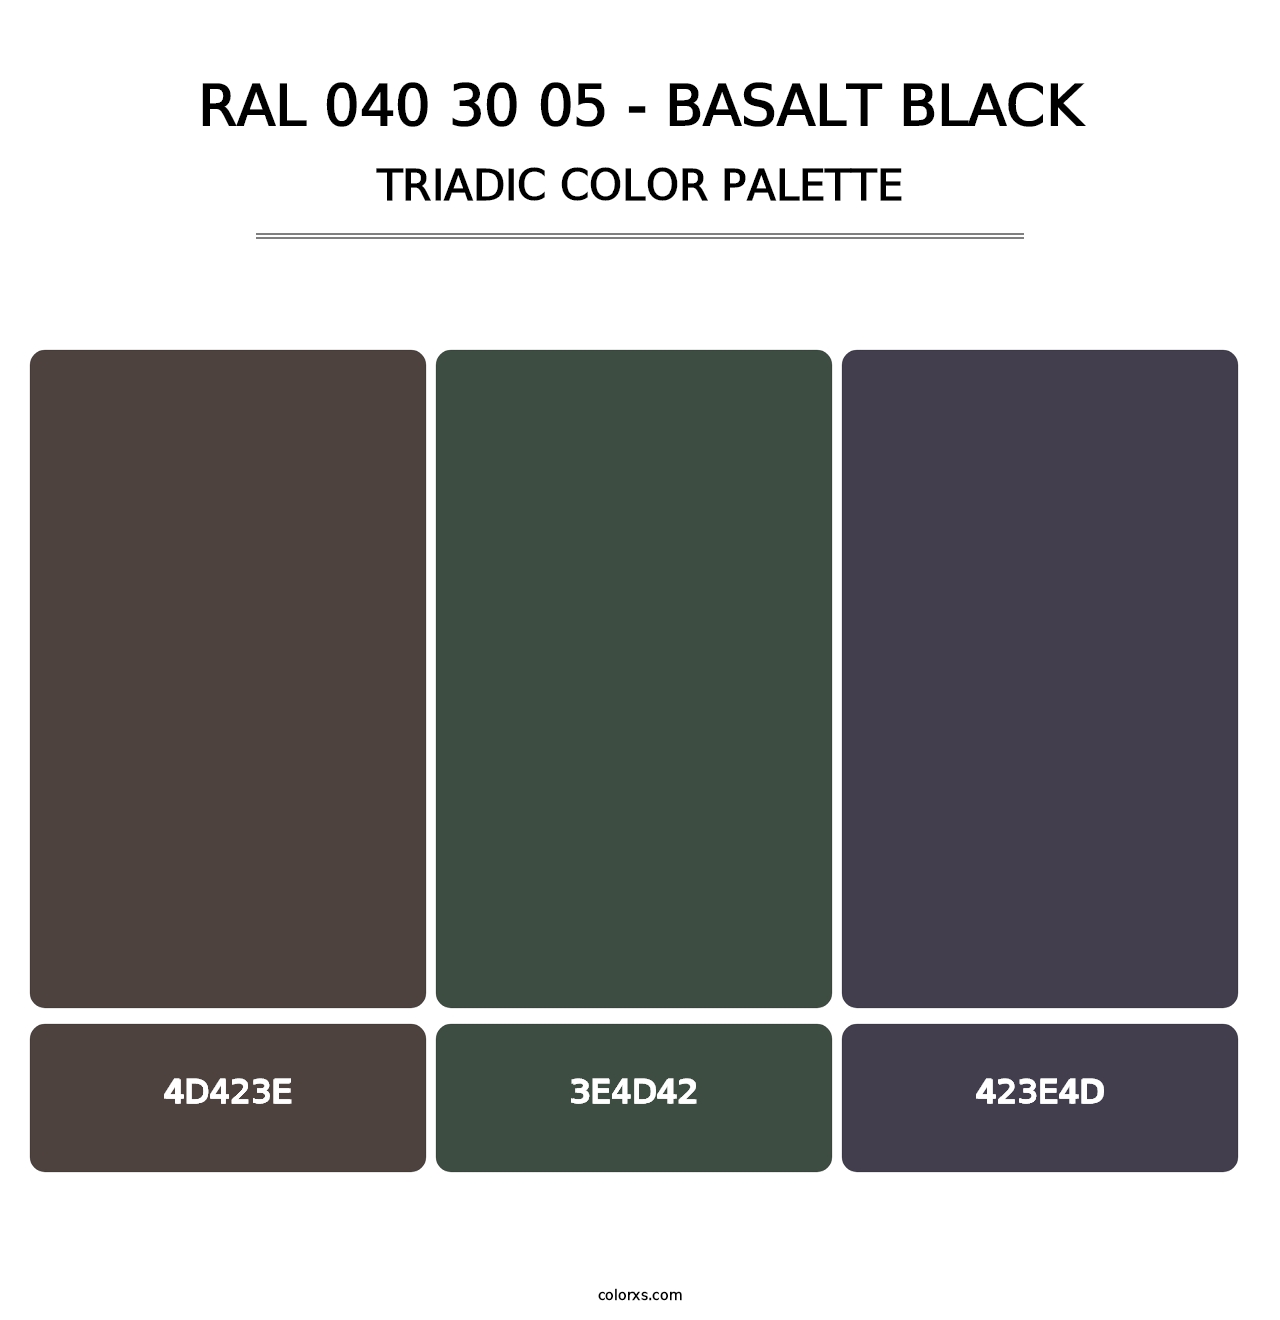 RAL 040 30 05 - Basalt Black - Triadic Color Palette